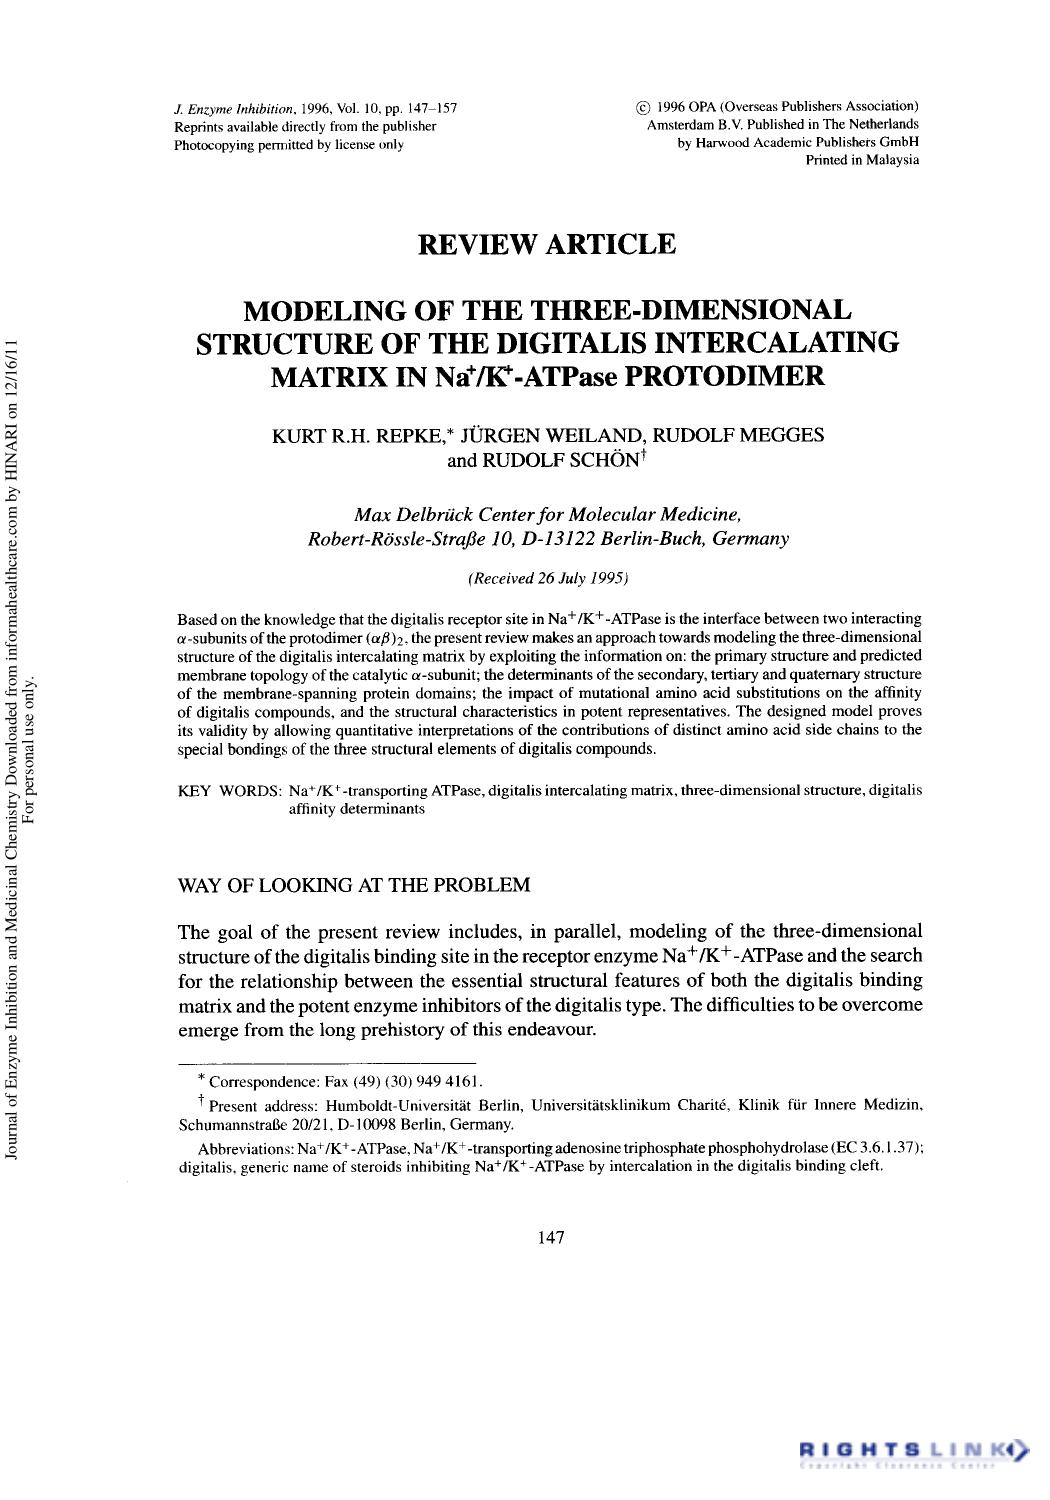 Modeling of the Three-Dimensional Structure of the Digitalis Intercalating Matrix in Na+K+-ATPase Protodimer by Kurt R.H. Repke JÜRgen Weiland Rudolf Megges & Rudolf Schöne